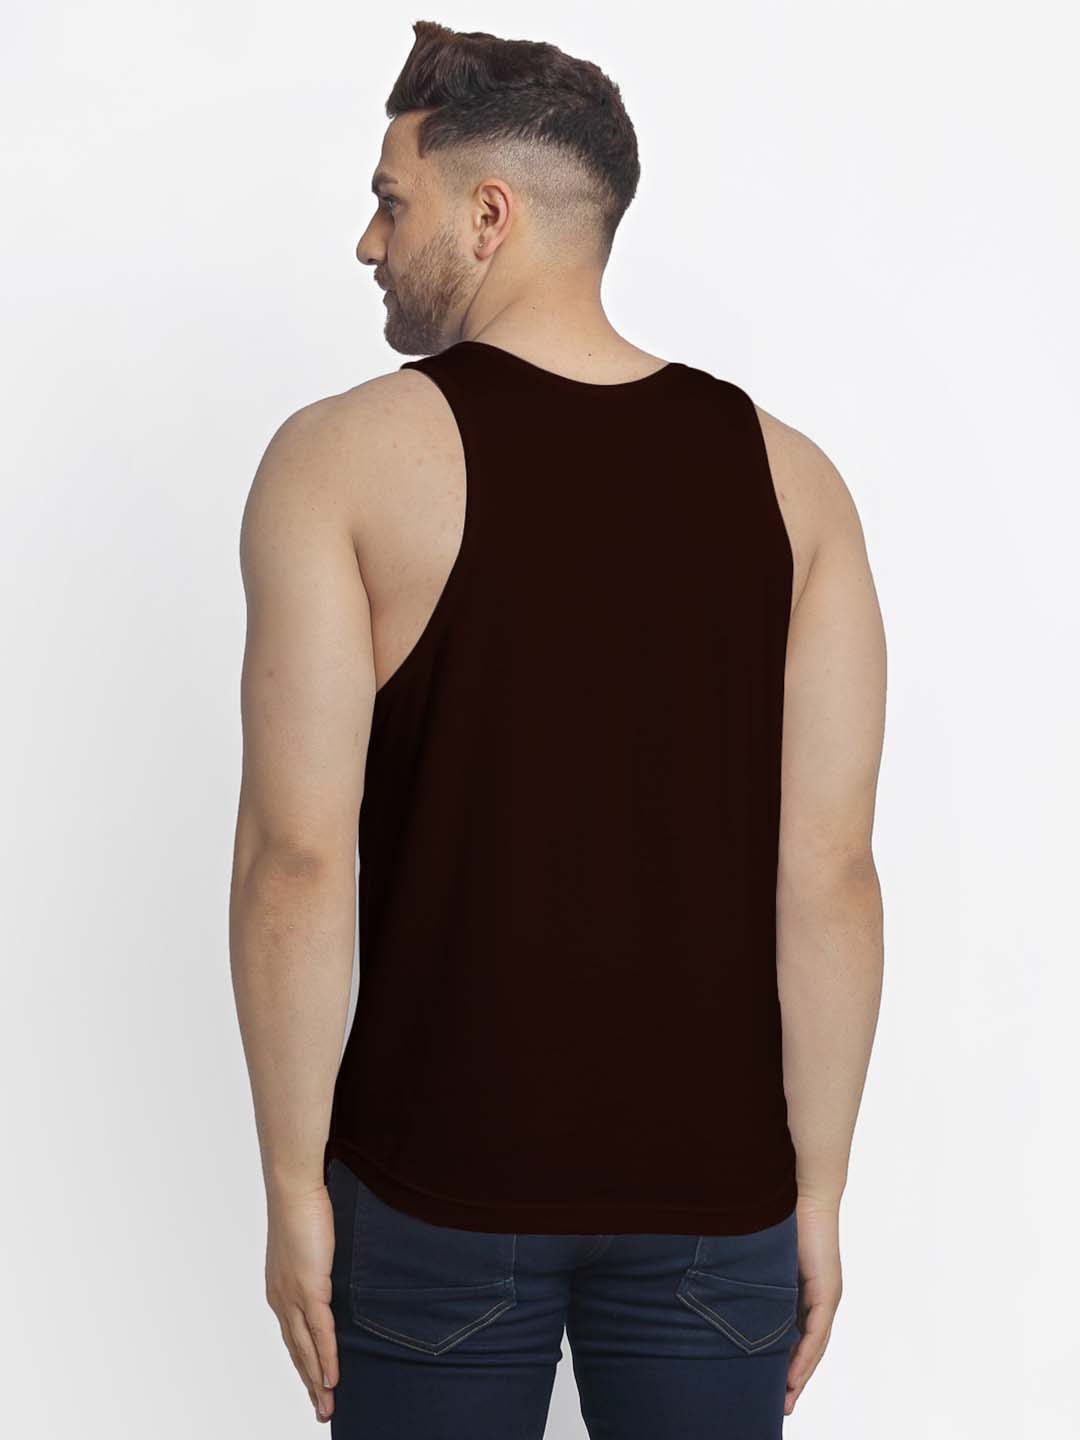 Mens's Installing Muscles Printed Innerwear Gym Vest - Friskers